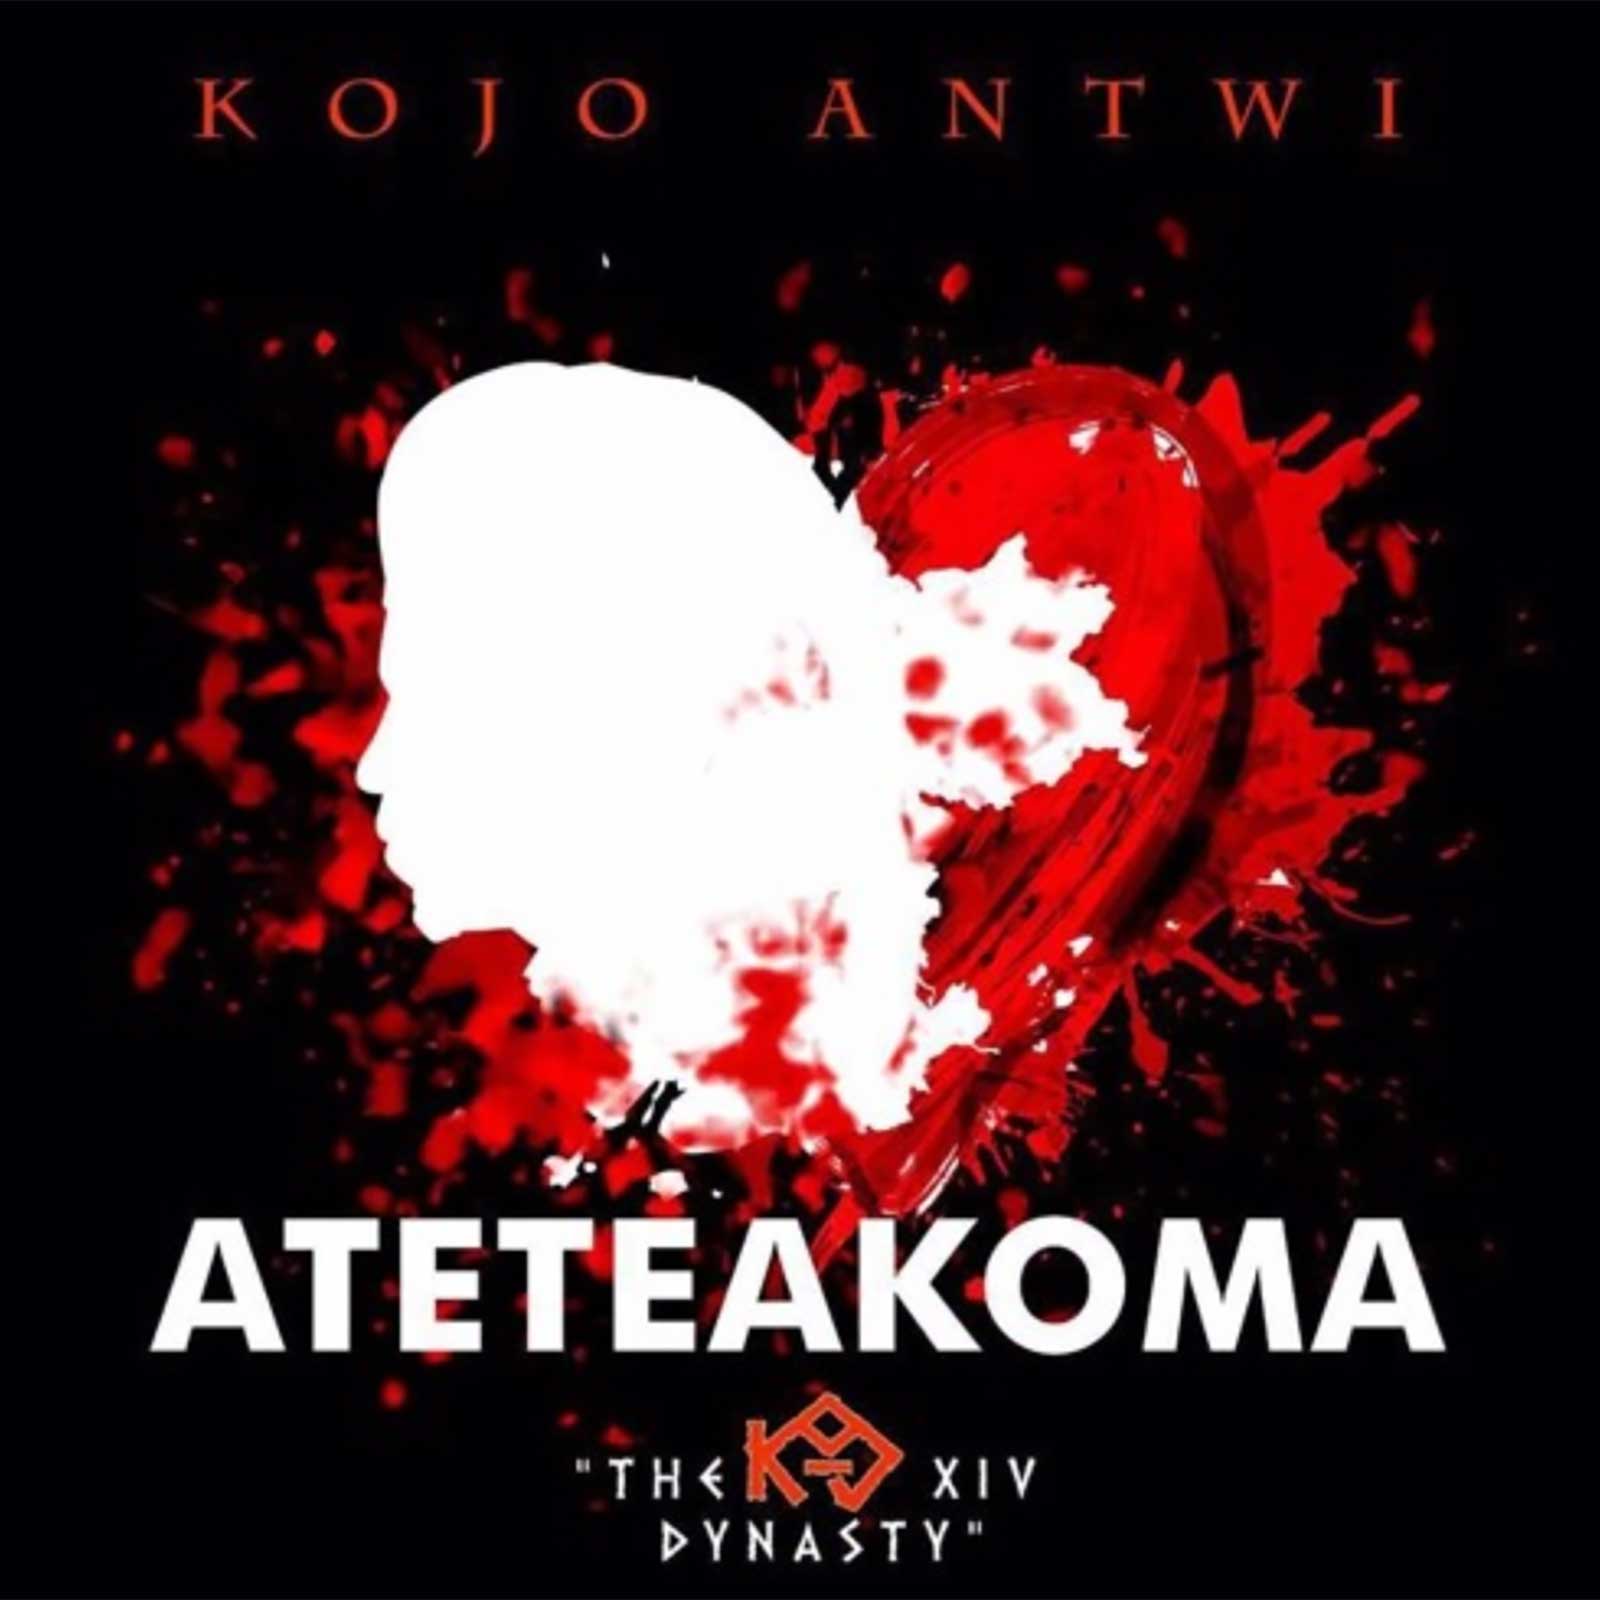 Ateteakoma by Kojo Antwi